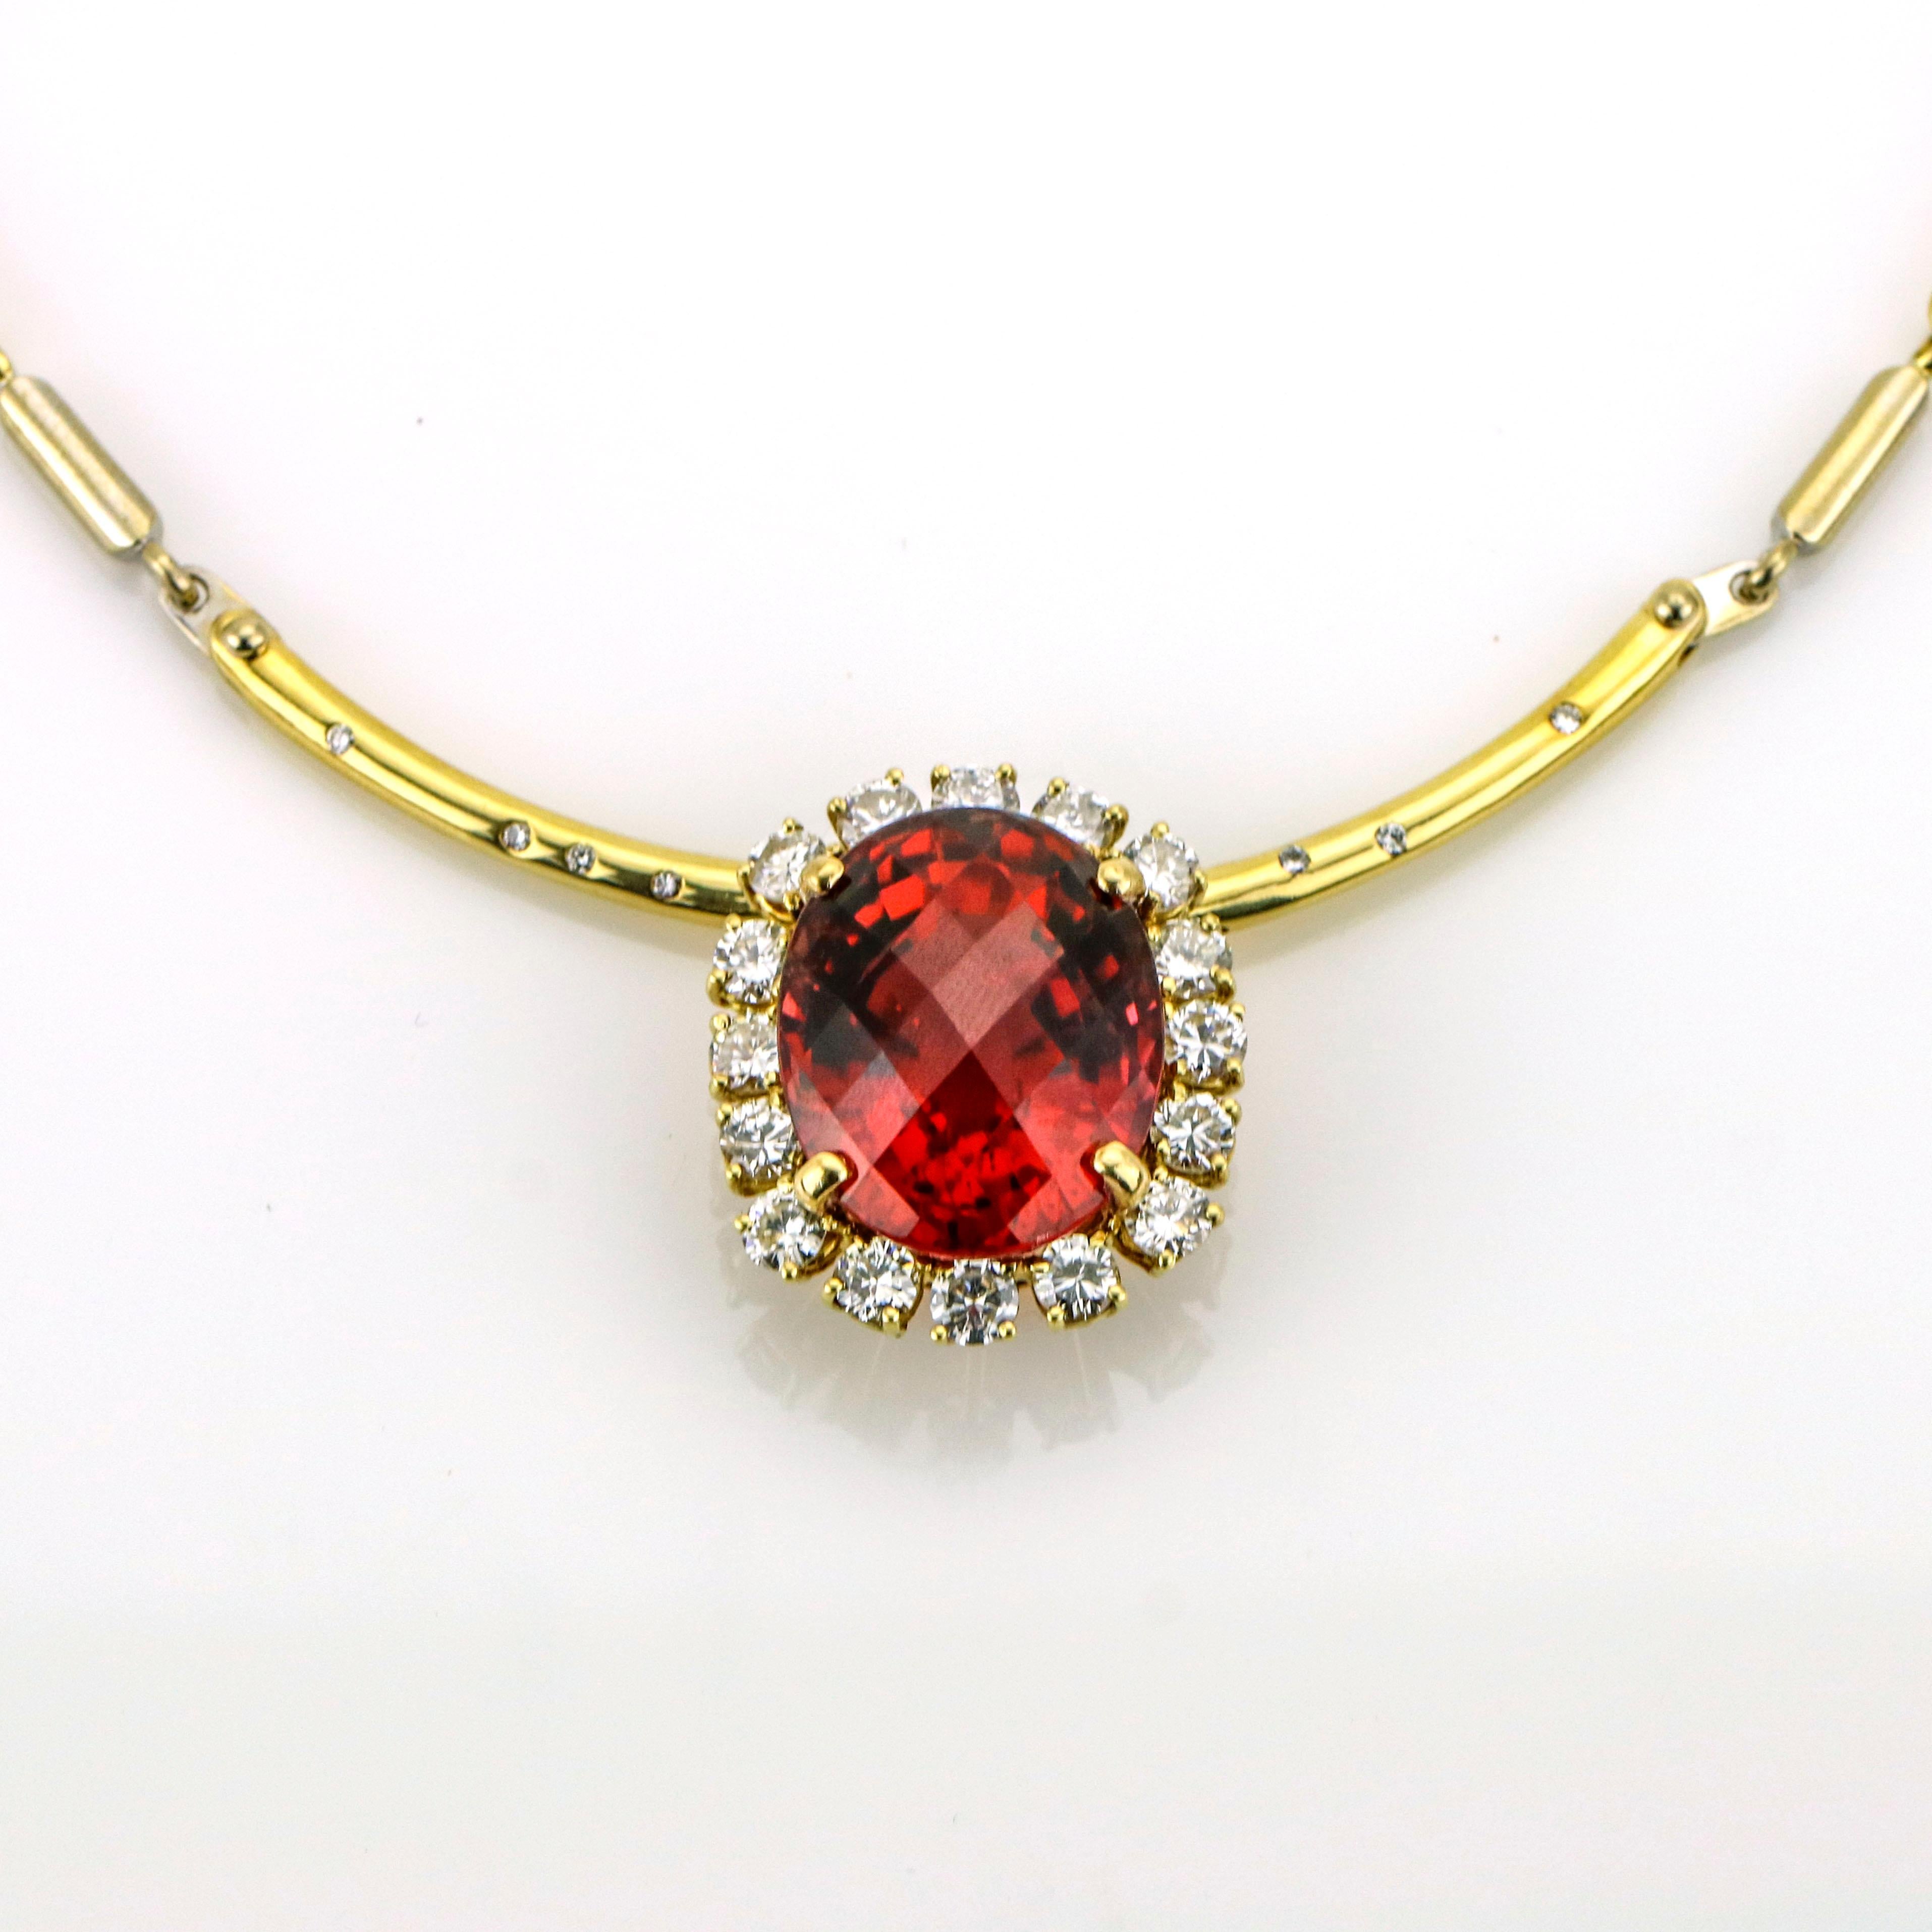 Oval Cut 39.34 Carat 18 Karat Yellow Gold Rubellite Tourmaline Diamond Pendant Necklace For Sale